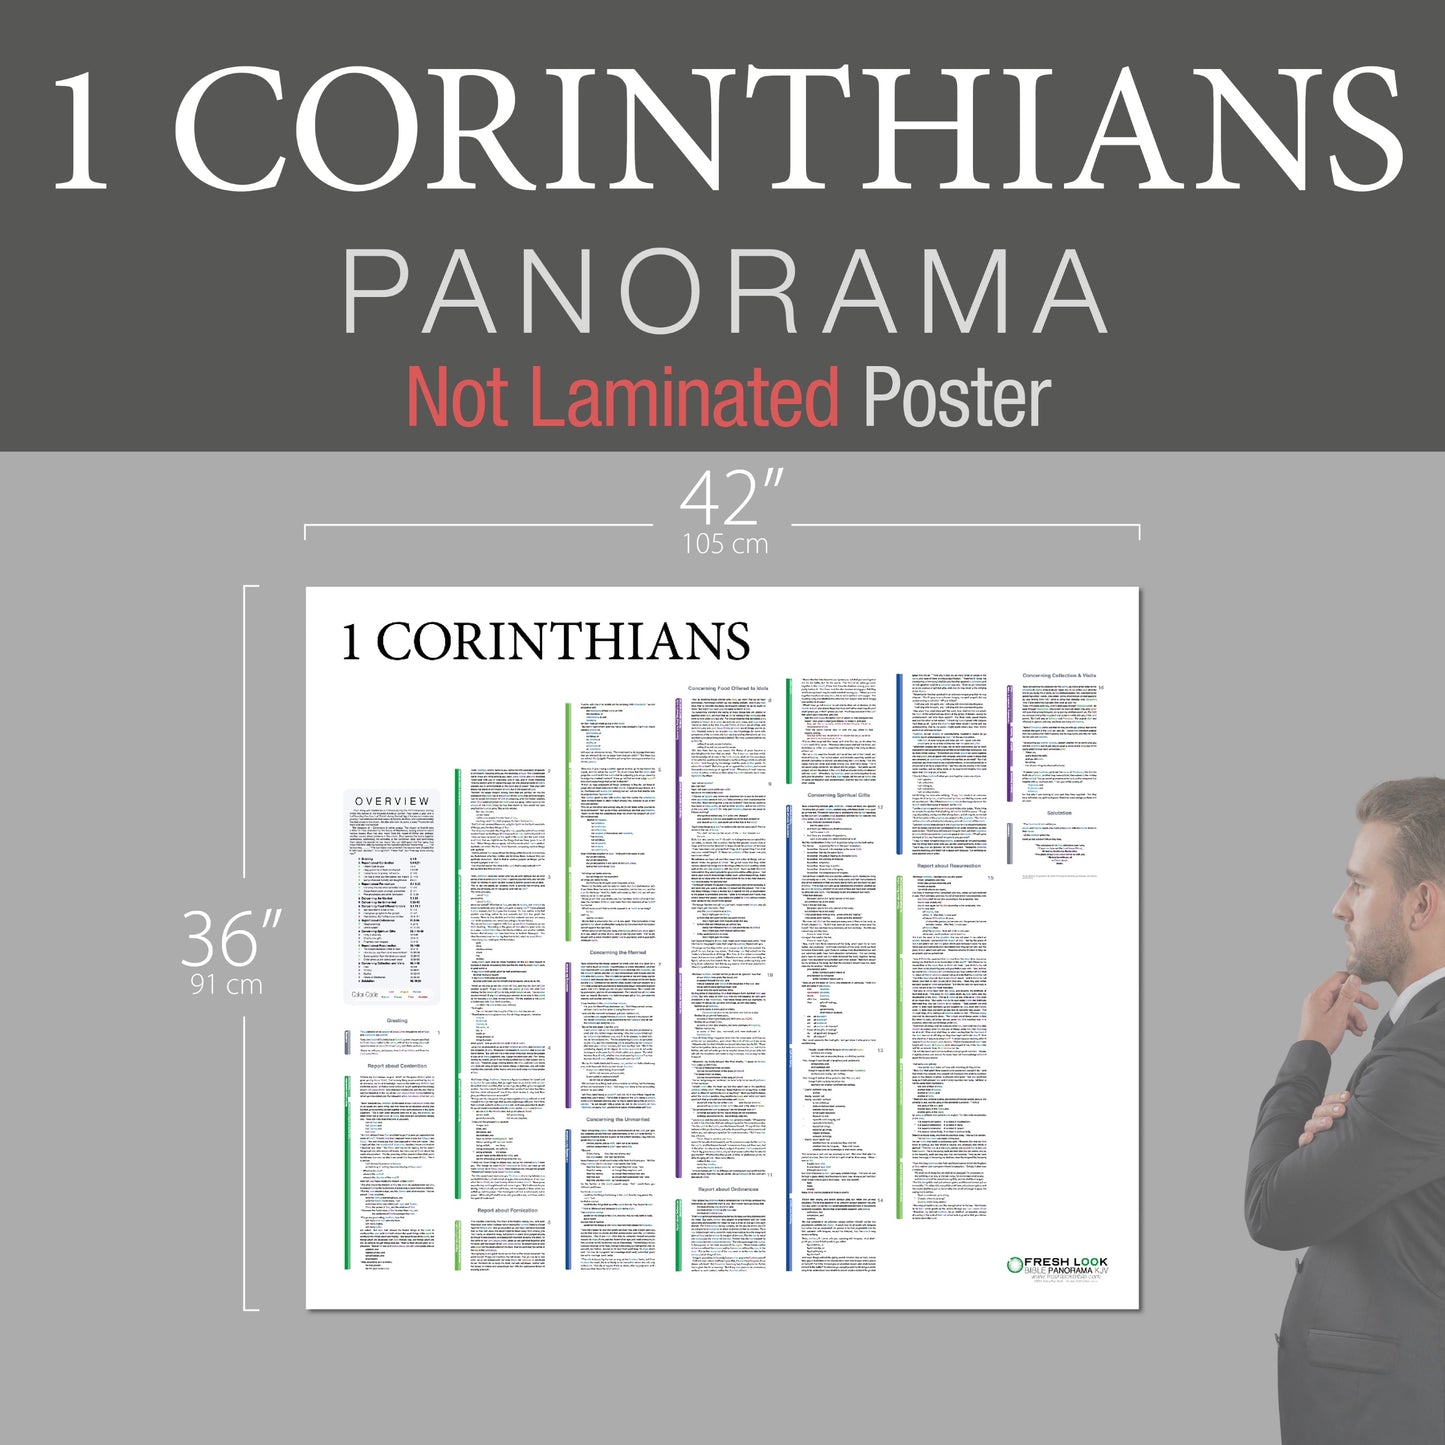 1 Corinthians Panorama Not Laminated